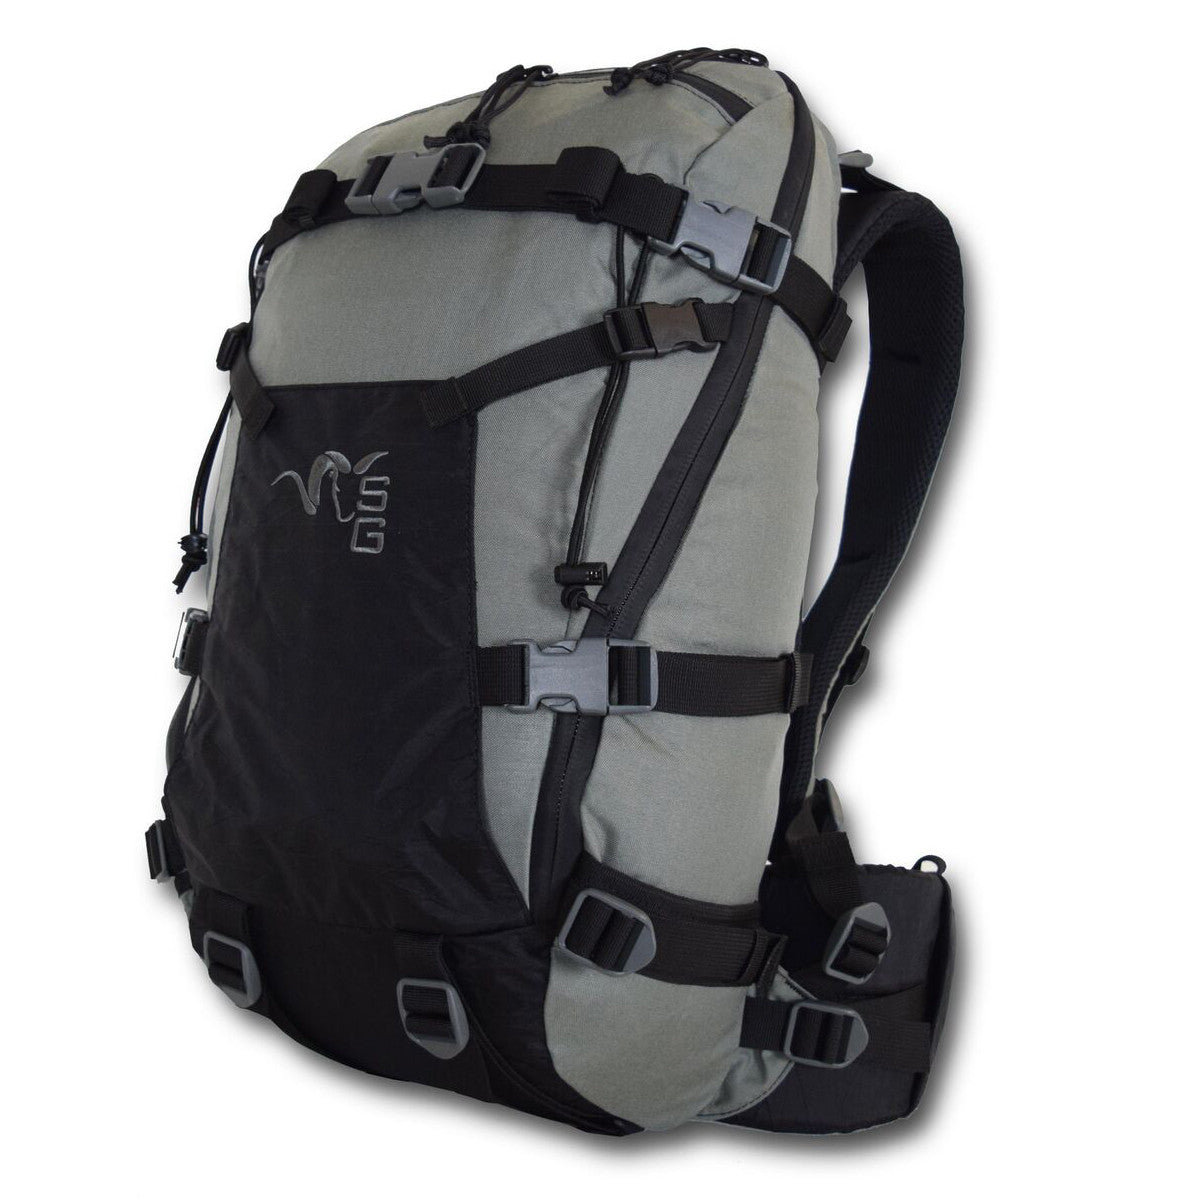 Stone Glacier Avail 2200 Backpack in Stone Glacier Avail 2200 Backpack - goHUNT Shop by GOHUNT | Stone Glacier - GOHUNT Shop